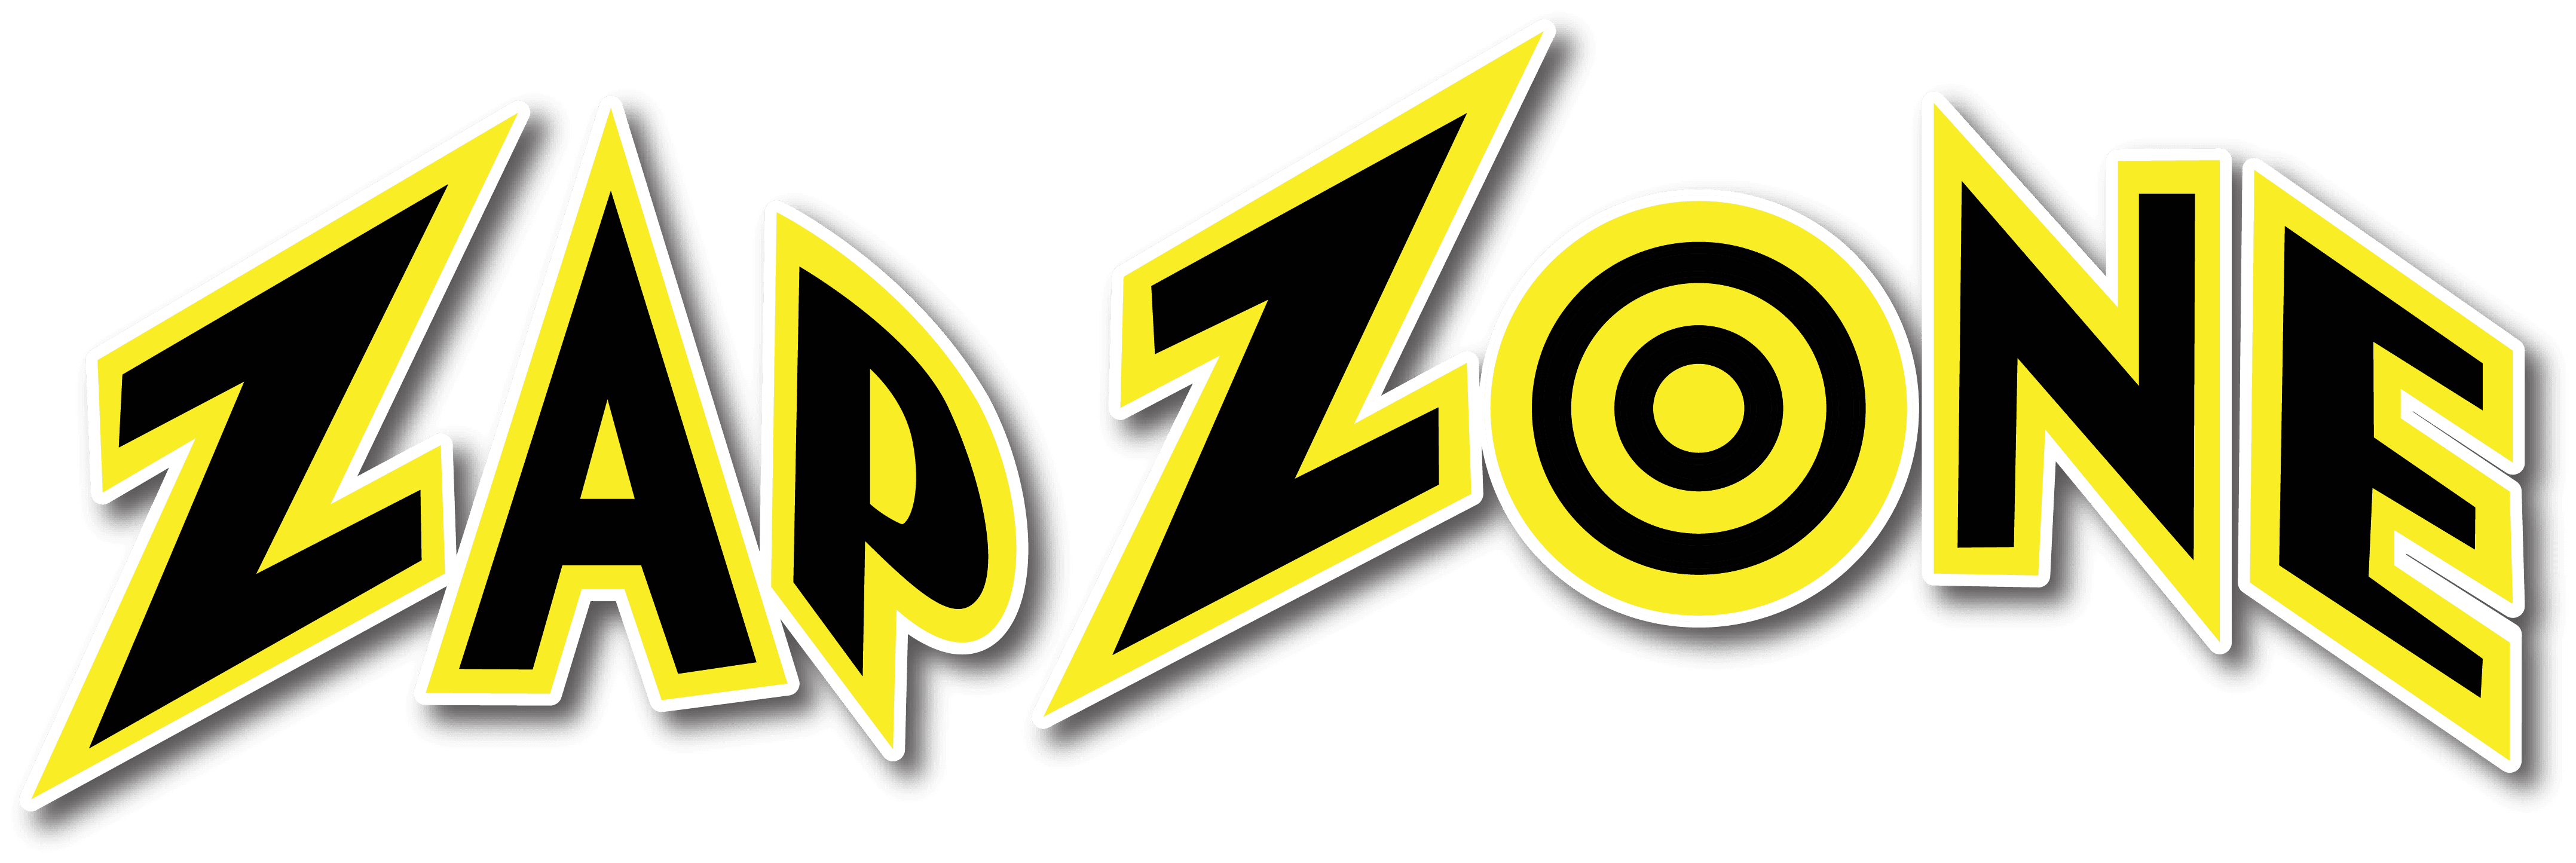 Zap Zone – Brighton